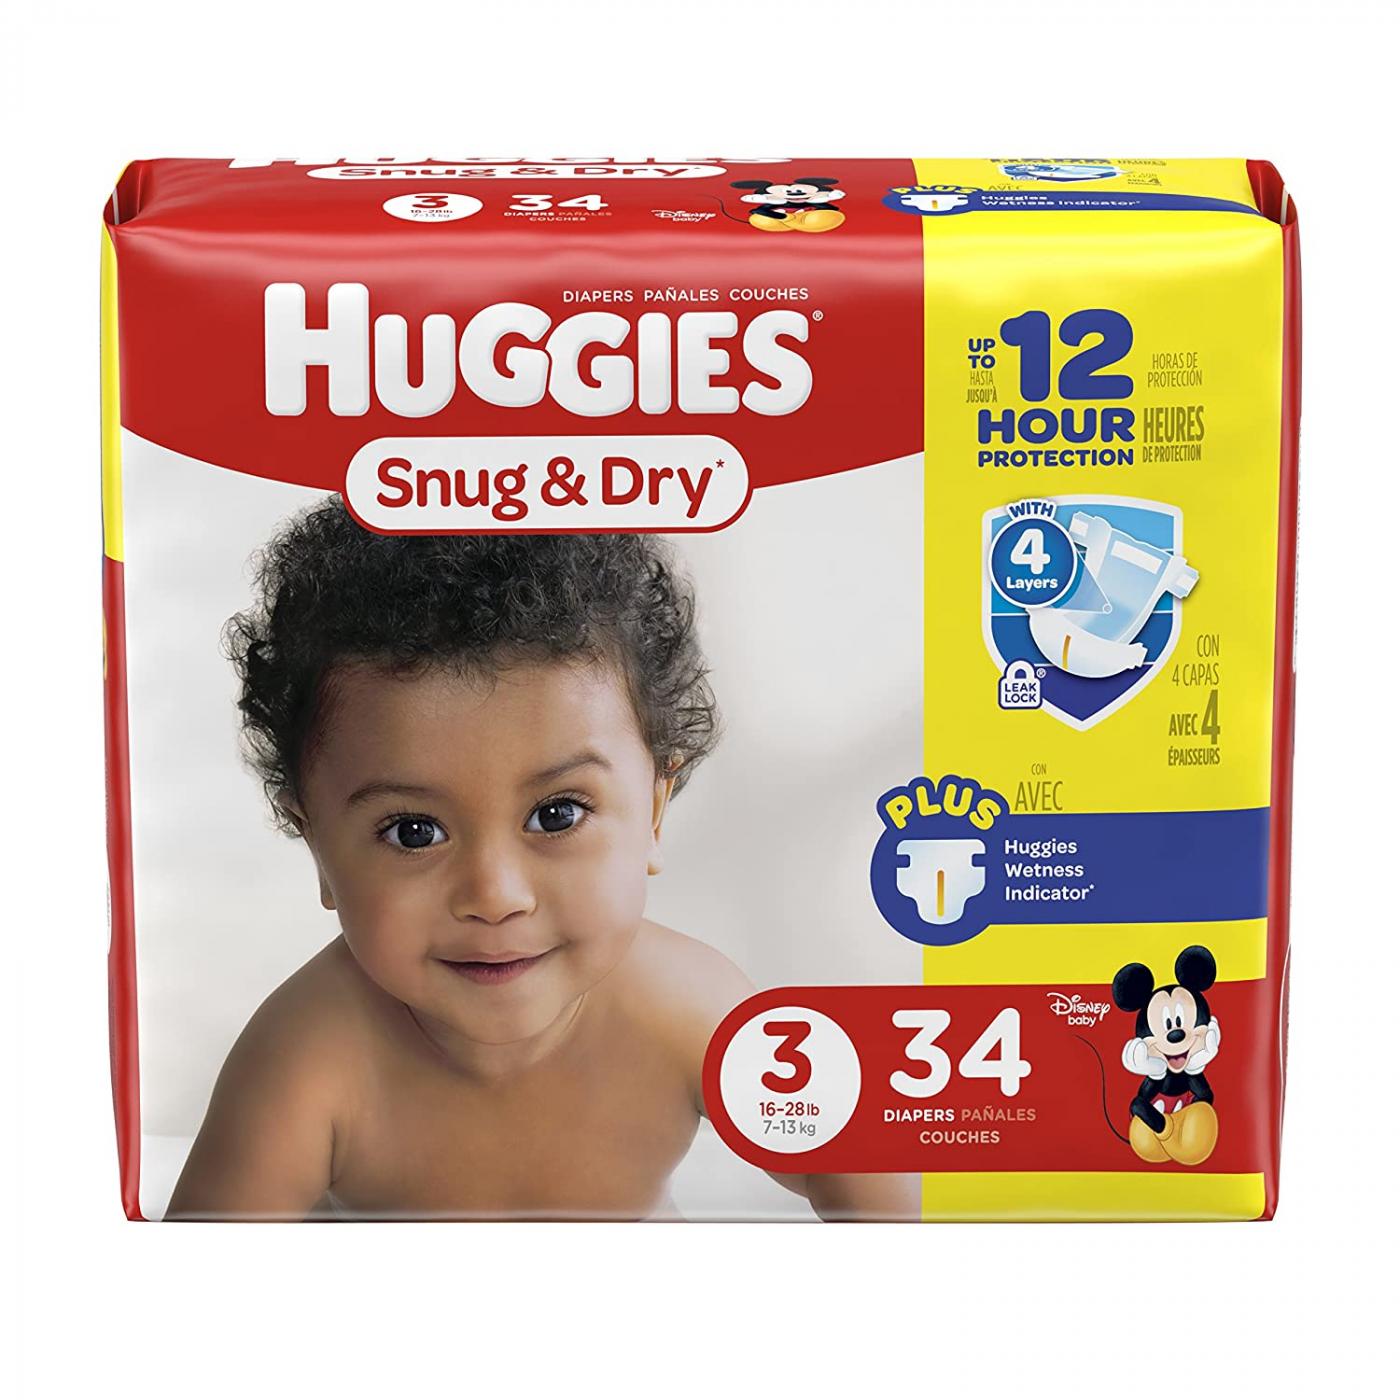 Huggies Couches Snug Dry 7-13 Kg x 34 